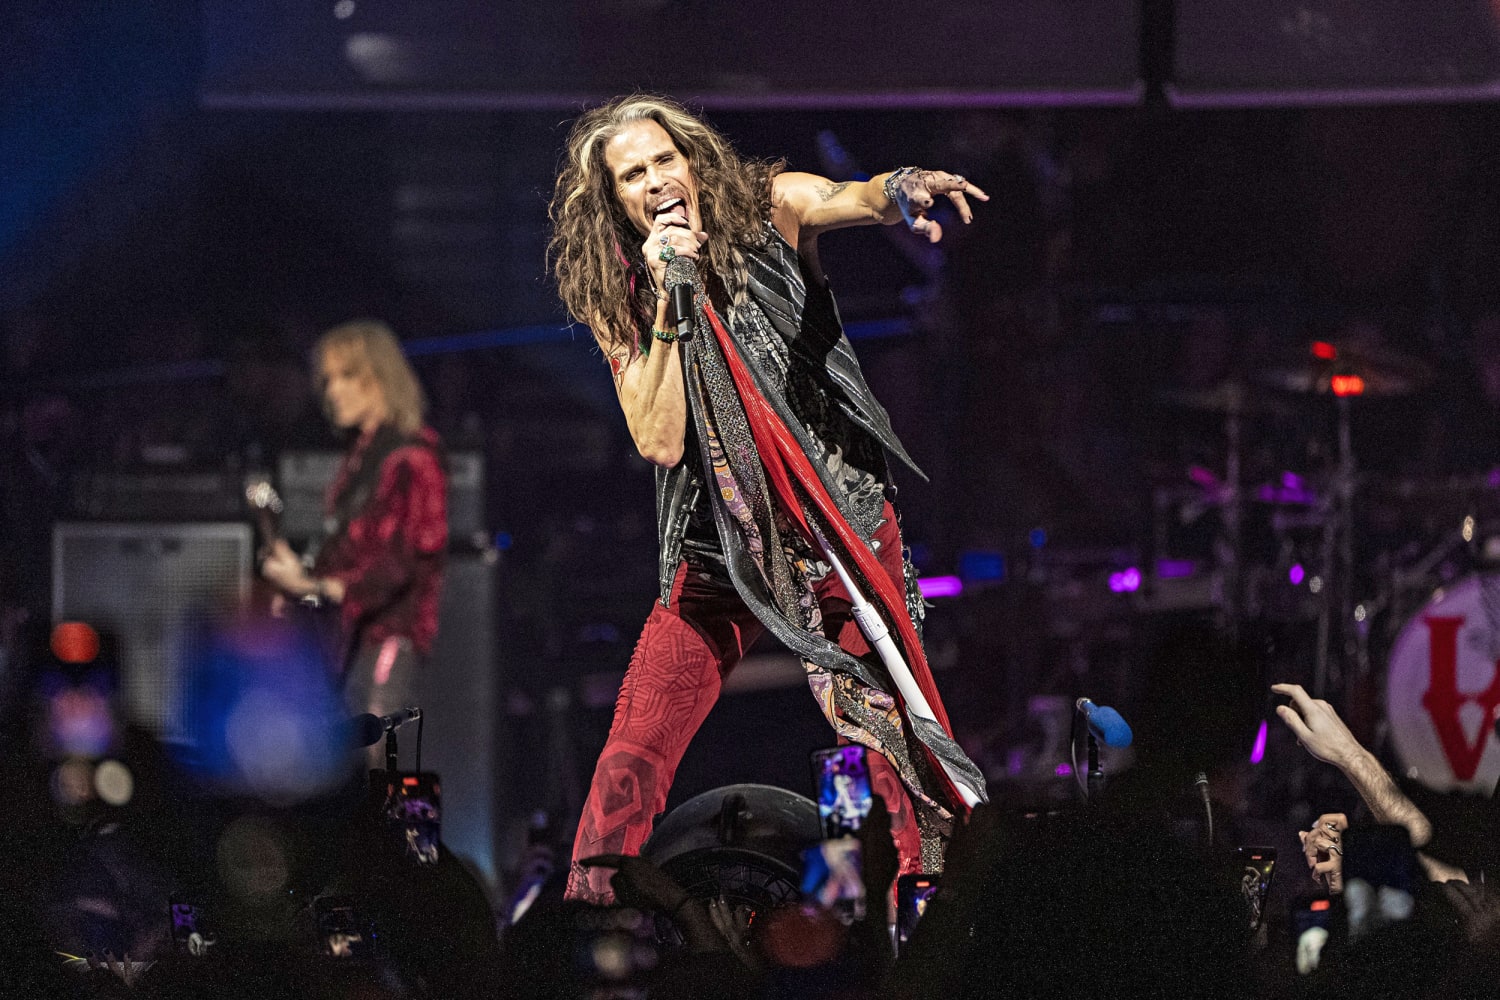 Aerosmith postpones farewell tour after singer Steven Tyler suffers vocal cord injury